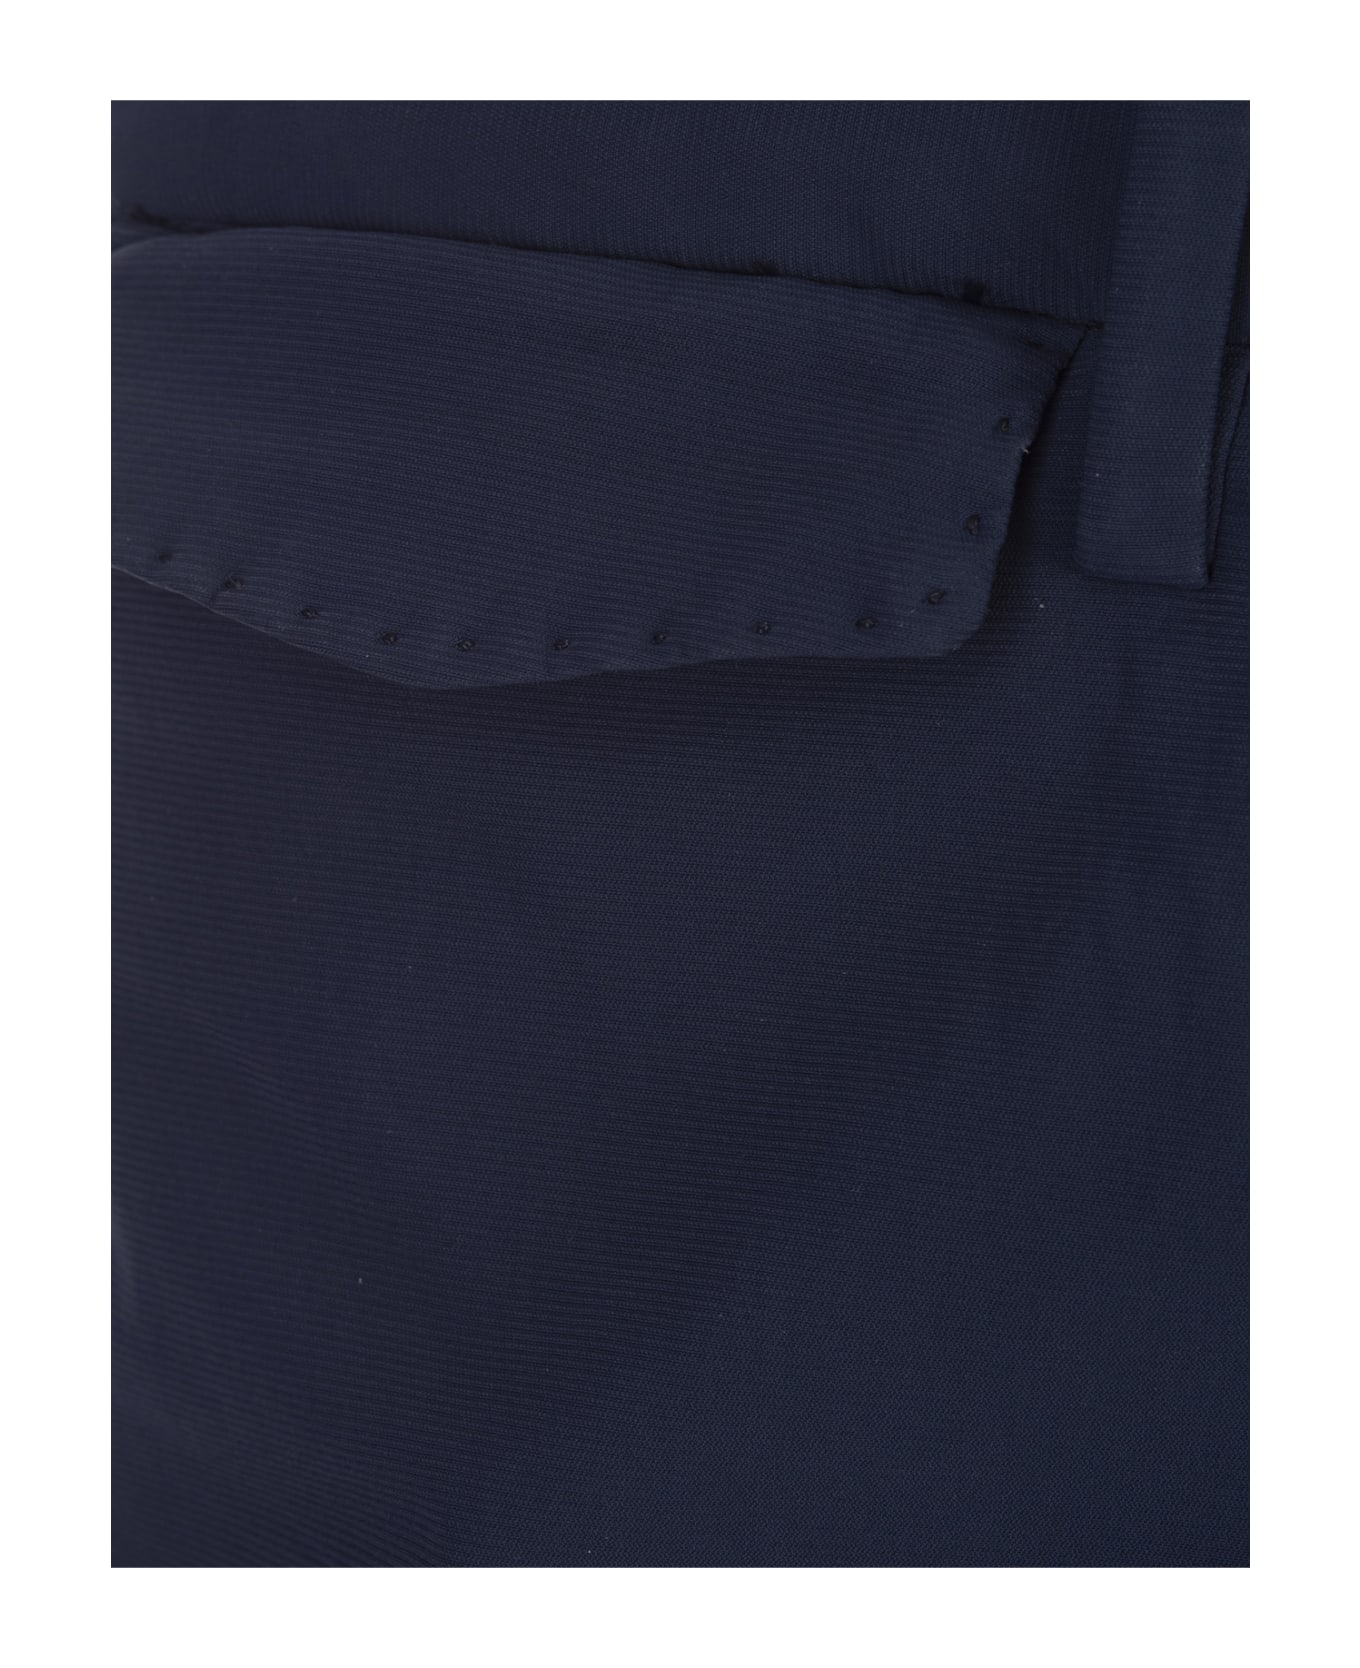 PT Bermuda Dark Blue Stretch Cotton Shorts - Blue